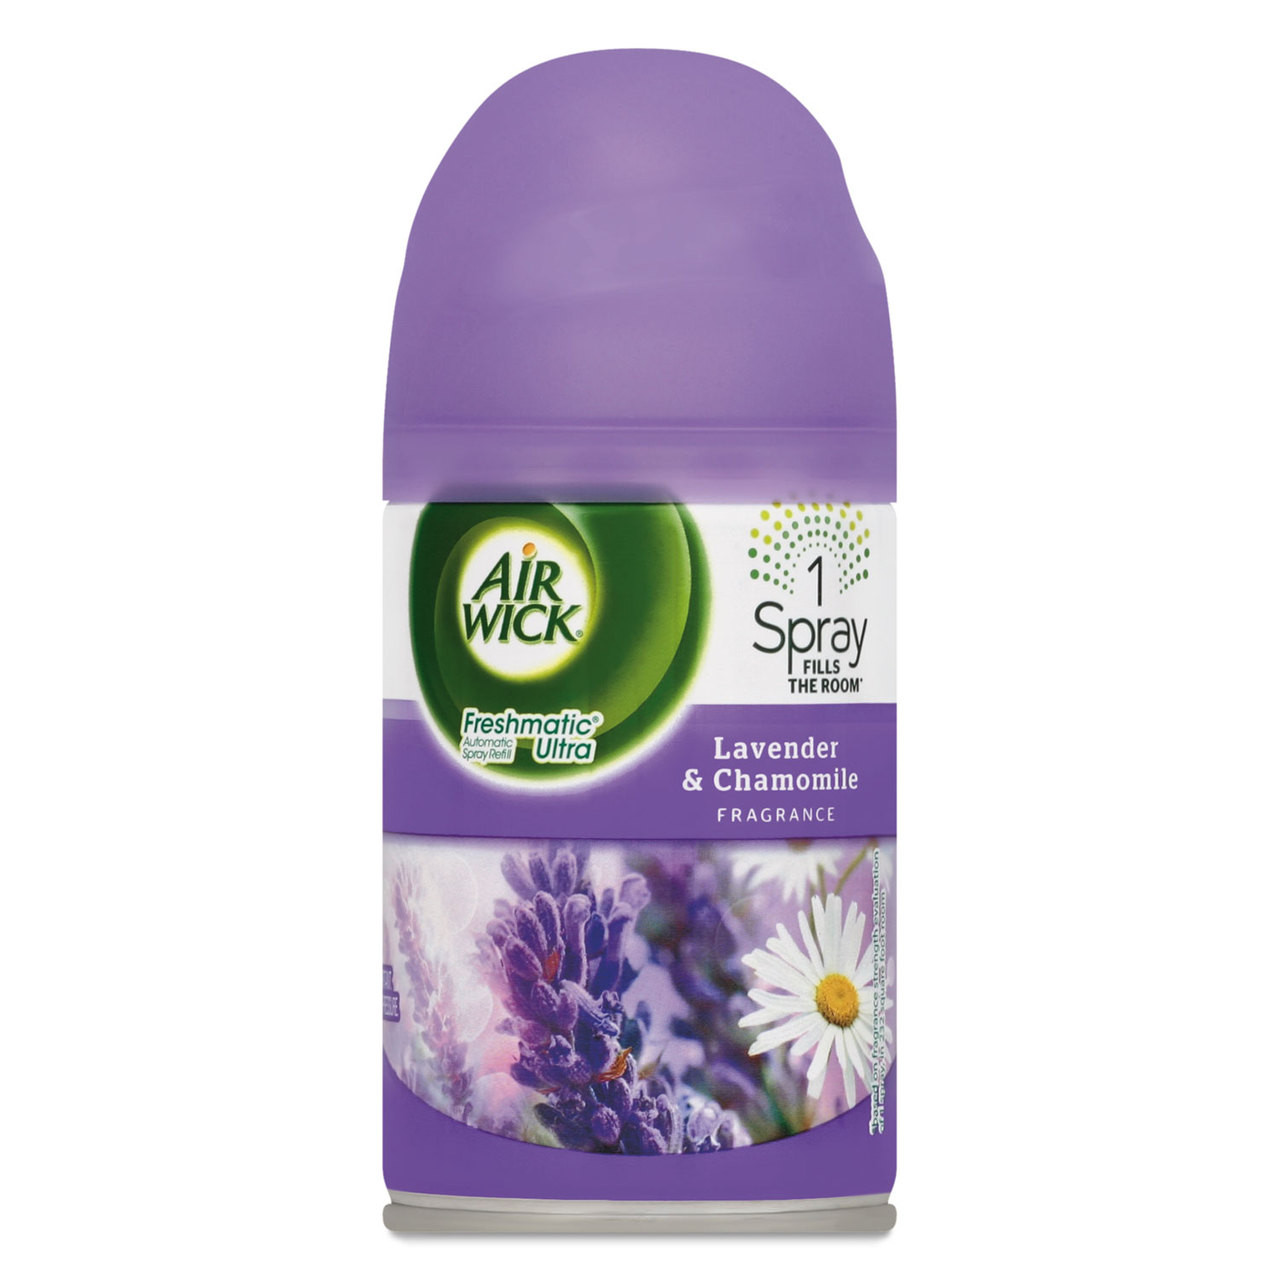 Air Wick FreshMatic Ultra Automatic Spray Refill, Lavender & Chamomile - 6.17 oz can